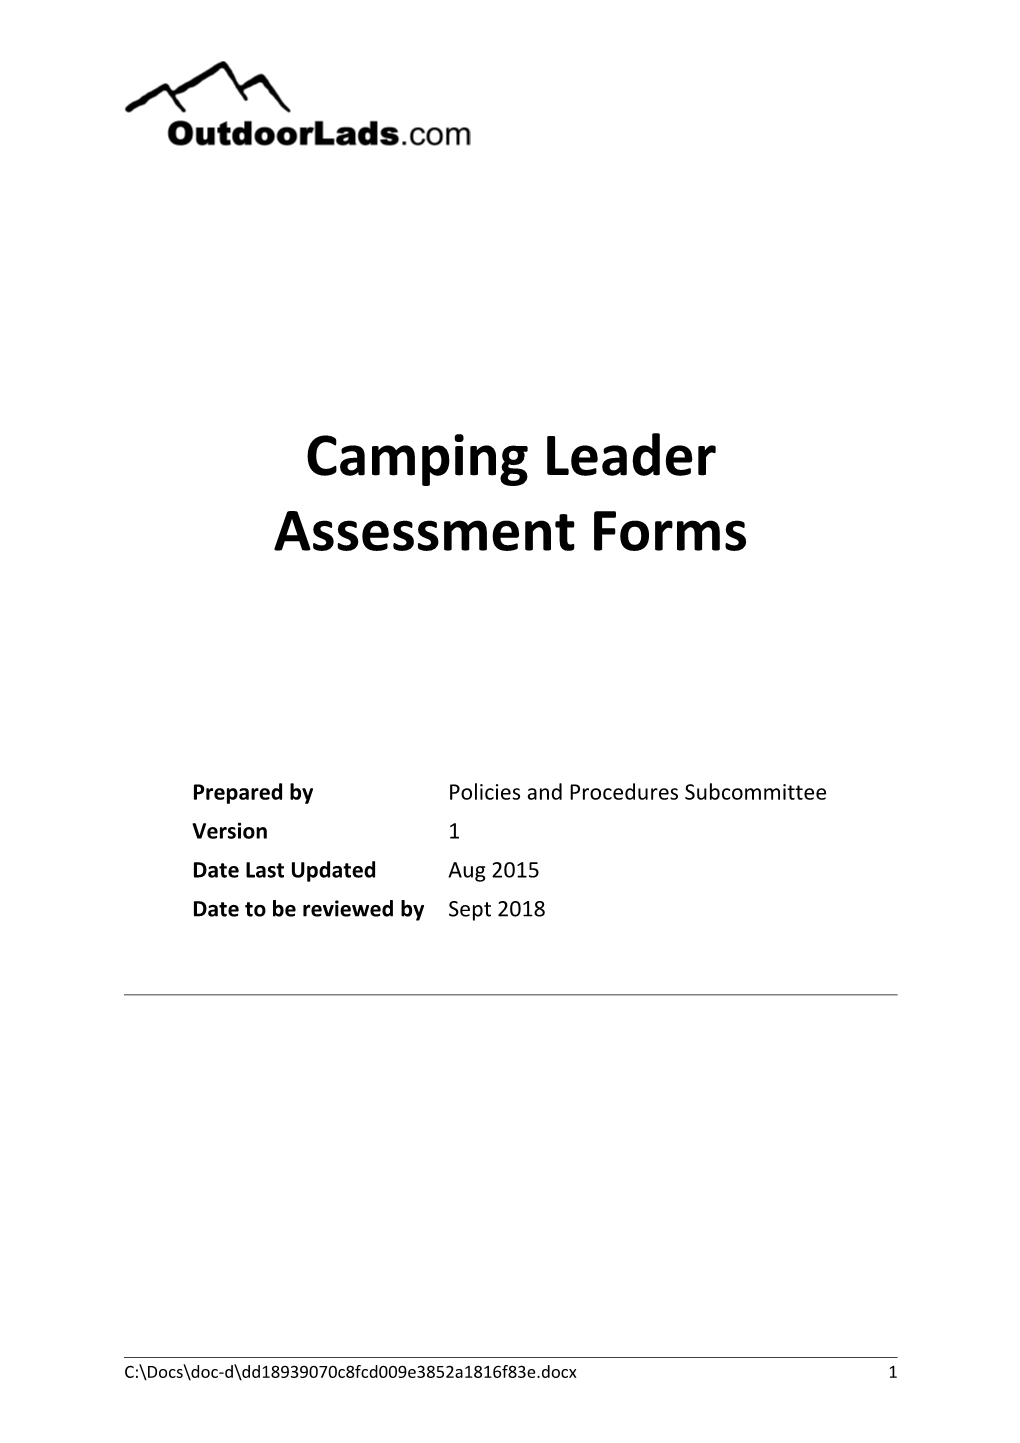 Assessment for Camping Leader